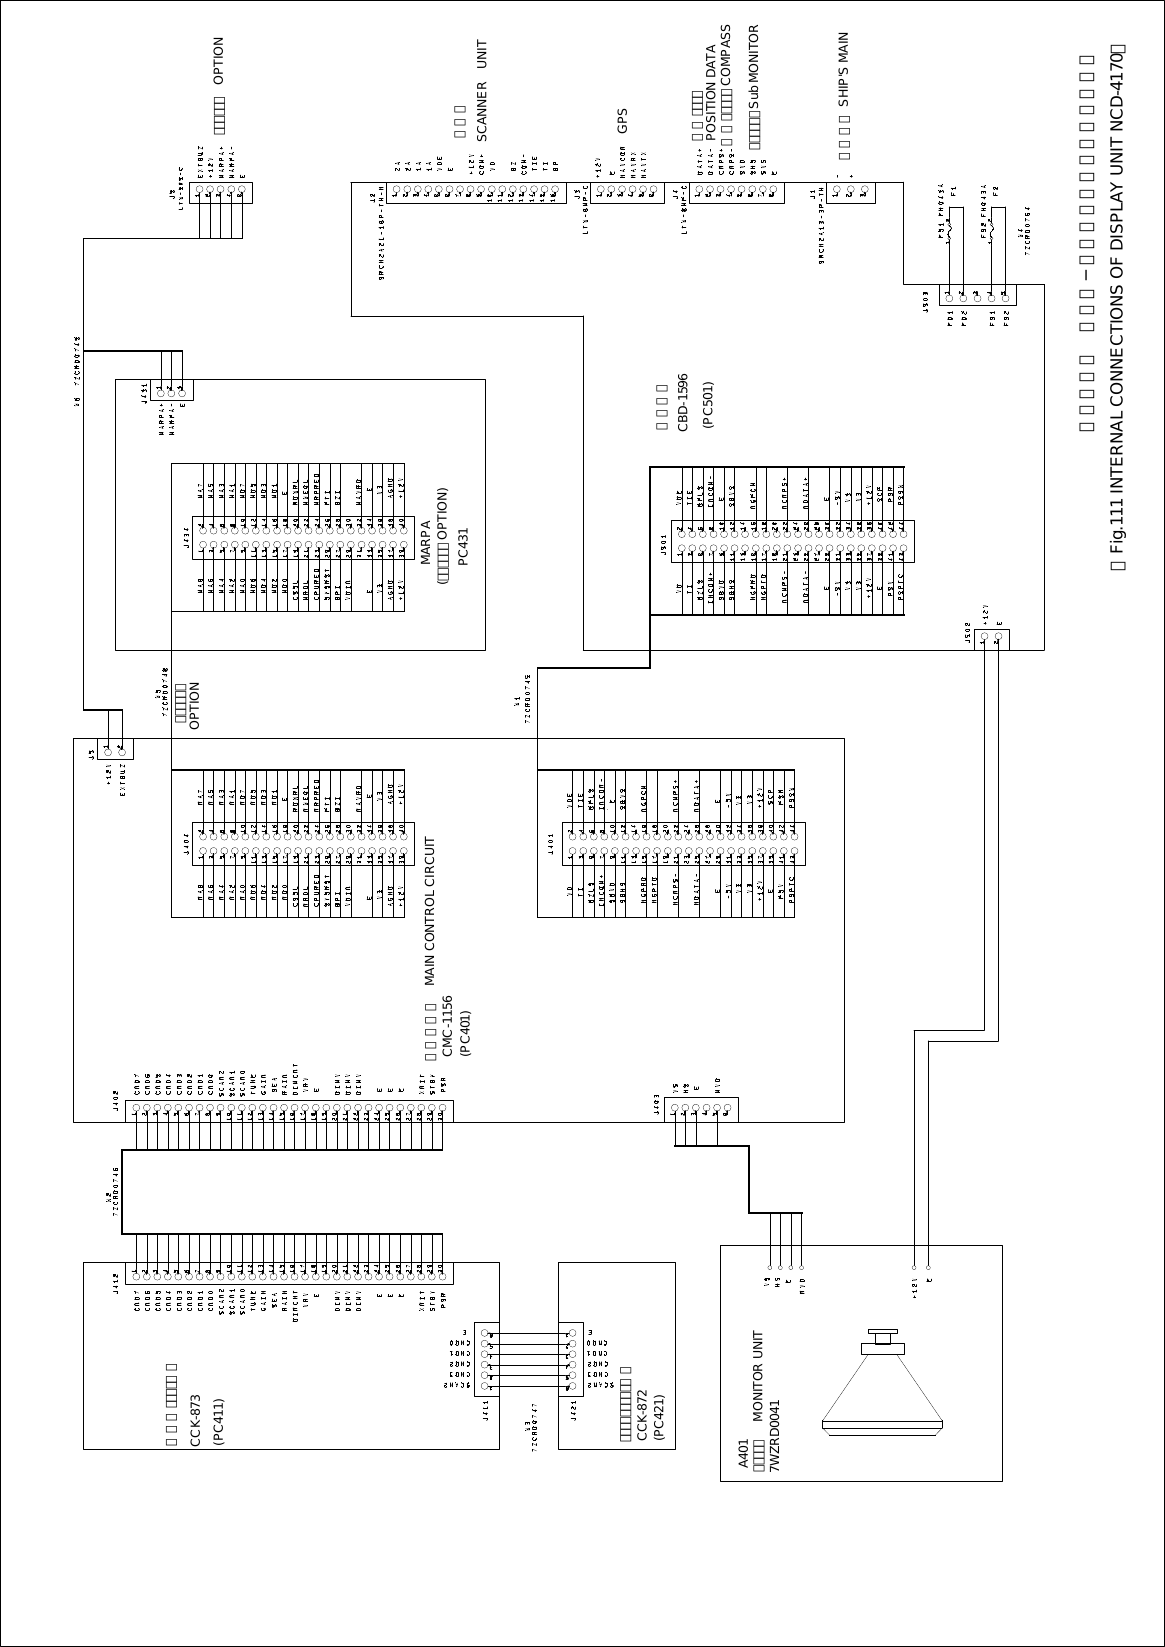 A401ﾓﾆﾀｰ部 MONITOR UNIT7WZRD0041ｿﾌﾄｷｰﾊﾟﾈﾙ回路CCK-872(PC421)主操作ﾊﾟﾈﾙ回路CCK-873(PC411)主制御回路 MAIN CONTROL CIRCUITCMC-1156(PC401)ｵﾌﾟｼｮﾝOPTIONMARPA(ｵﾌﾟｼｮﾝ OPTION)PC431電源回路CBD-1596(PC501)ｵﾌﾟｼｮﾝ OPTION空中線SCANNER UNITGPS位置ﾃﾞｰﾀ POSITION DATA電子ｺﾝﾊﾟｽ COMPASSｻﾌﾞﾓﾆﾀ Sub MONITOR船内電源 SHIP&apos;S MAIN【図１１１ ＮＣＤ−４１７０指示機機内接続図】【Fig.111 INTERNAL CONNECTIONS OF DISPLAY UNIT NCD-4170】